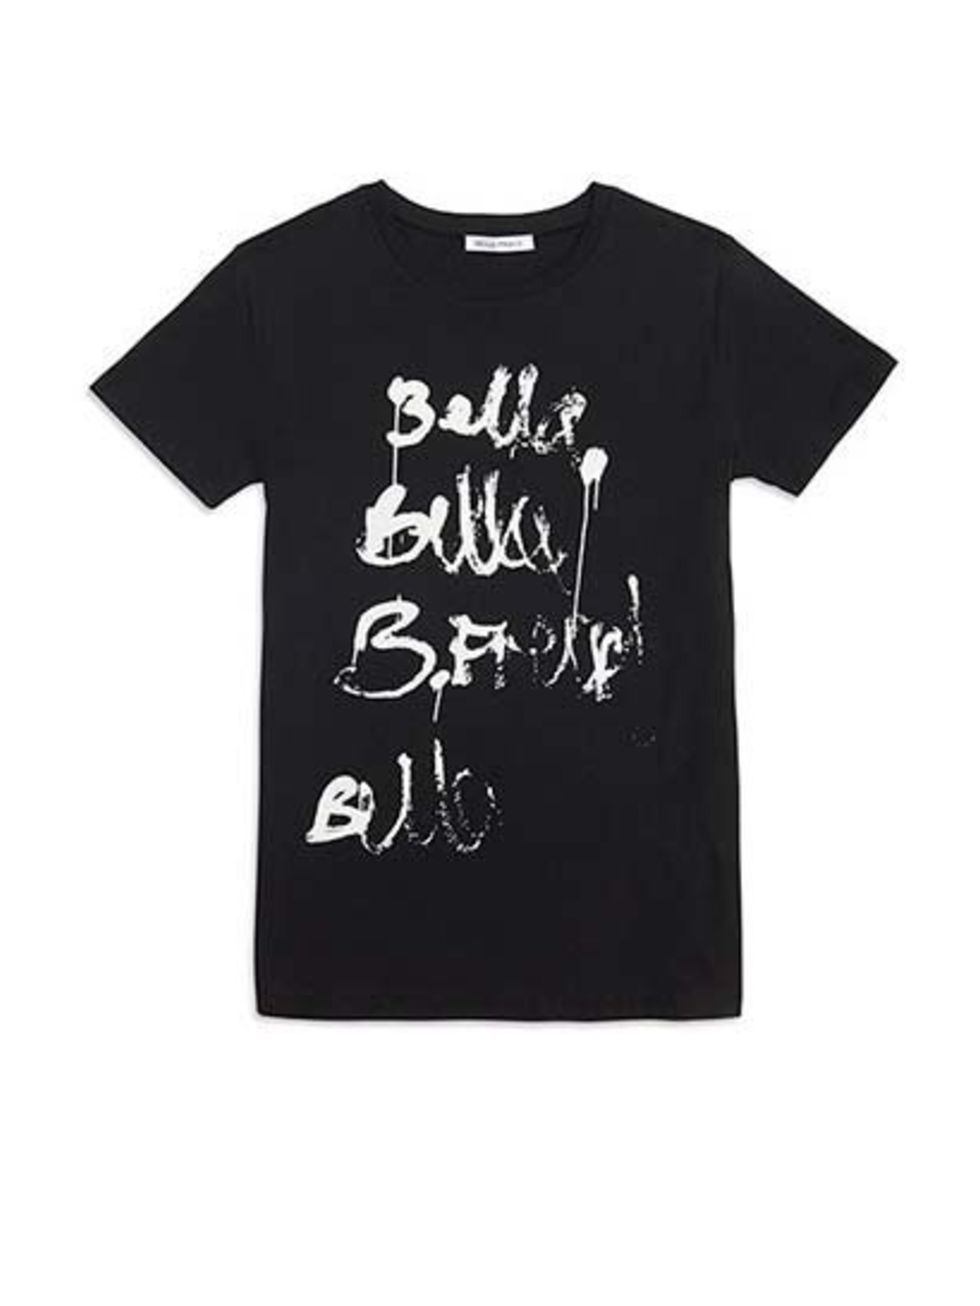 <p>Bella Bella t-shirt, £85 from <a href="http://www.bellafreud.com/bella-bella-t-shirt-black.html">Bella Freud</a>.</p>